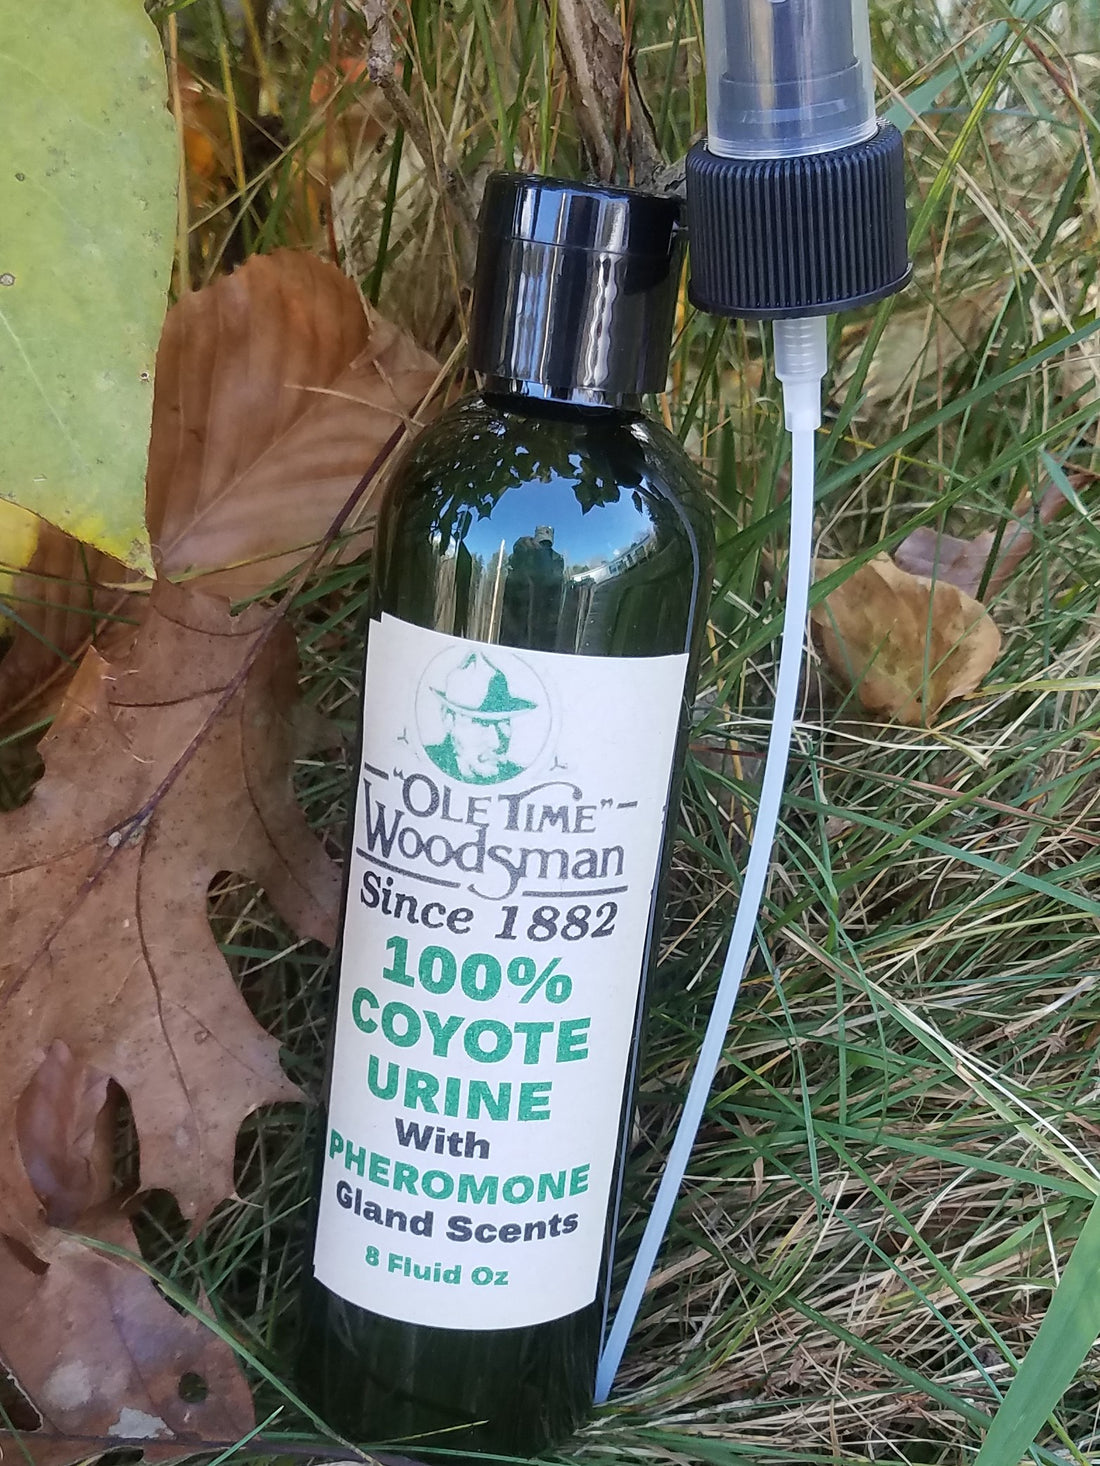 Coyote scent territorial marking versus urine elimination